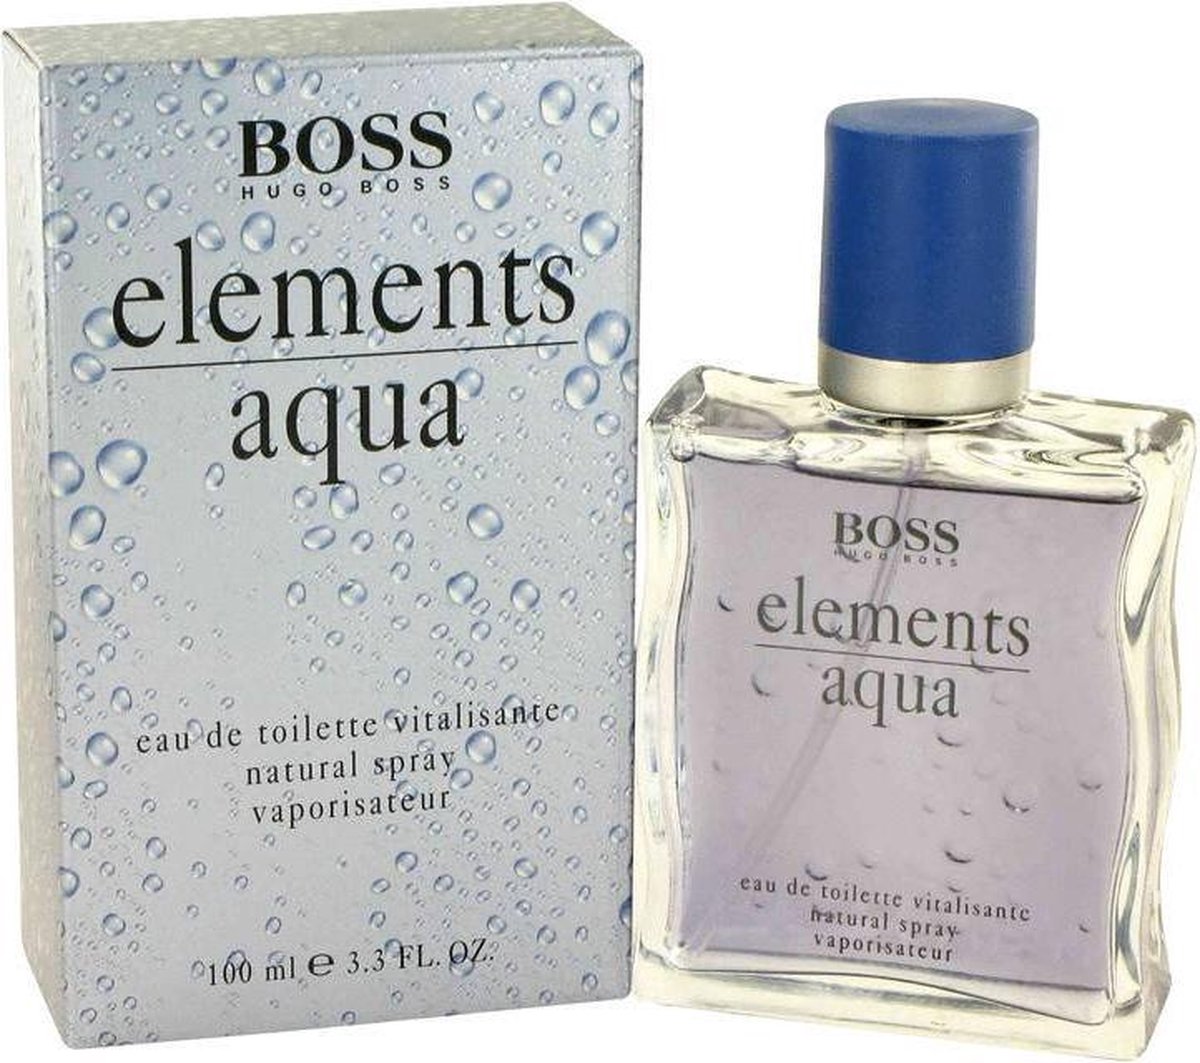 aqua elements hugo boss parfum